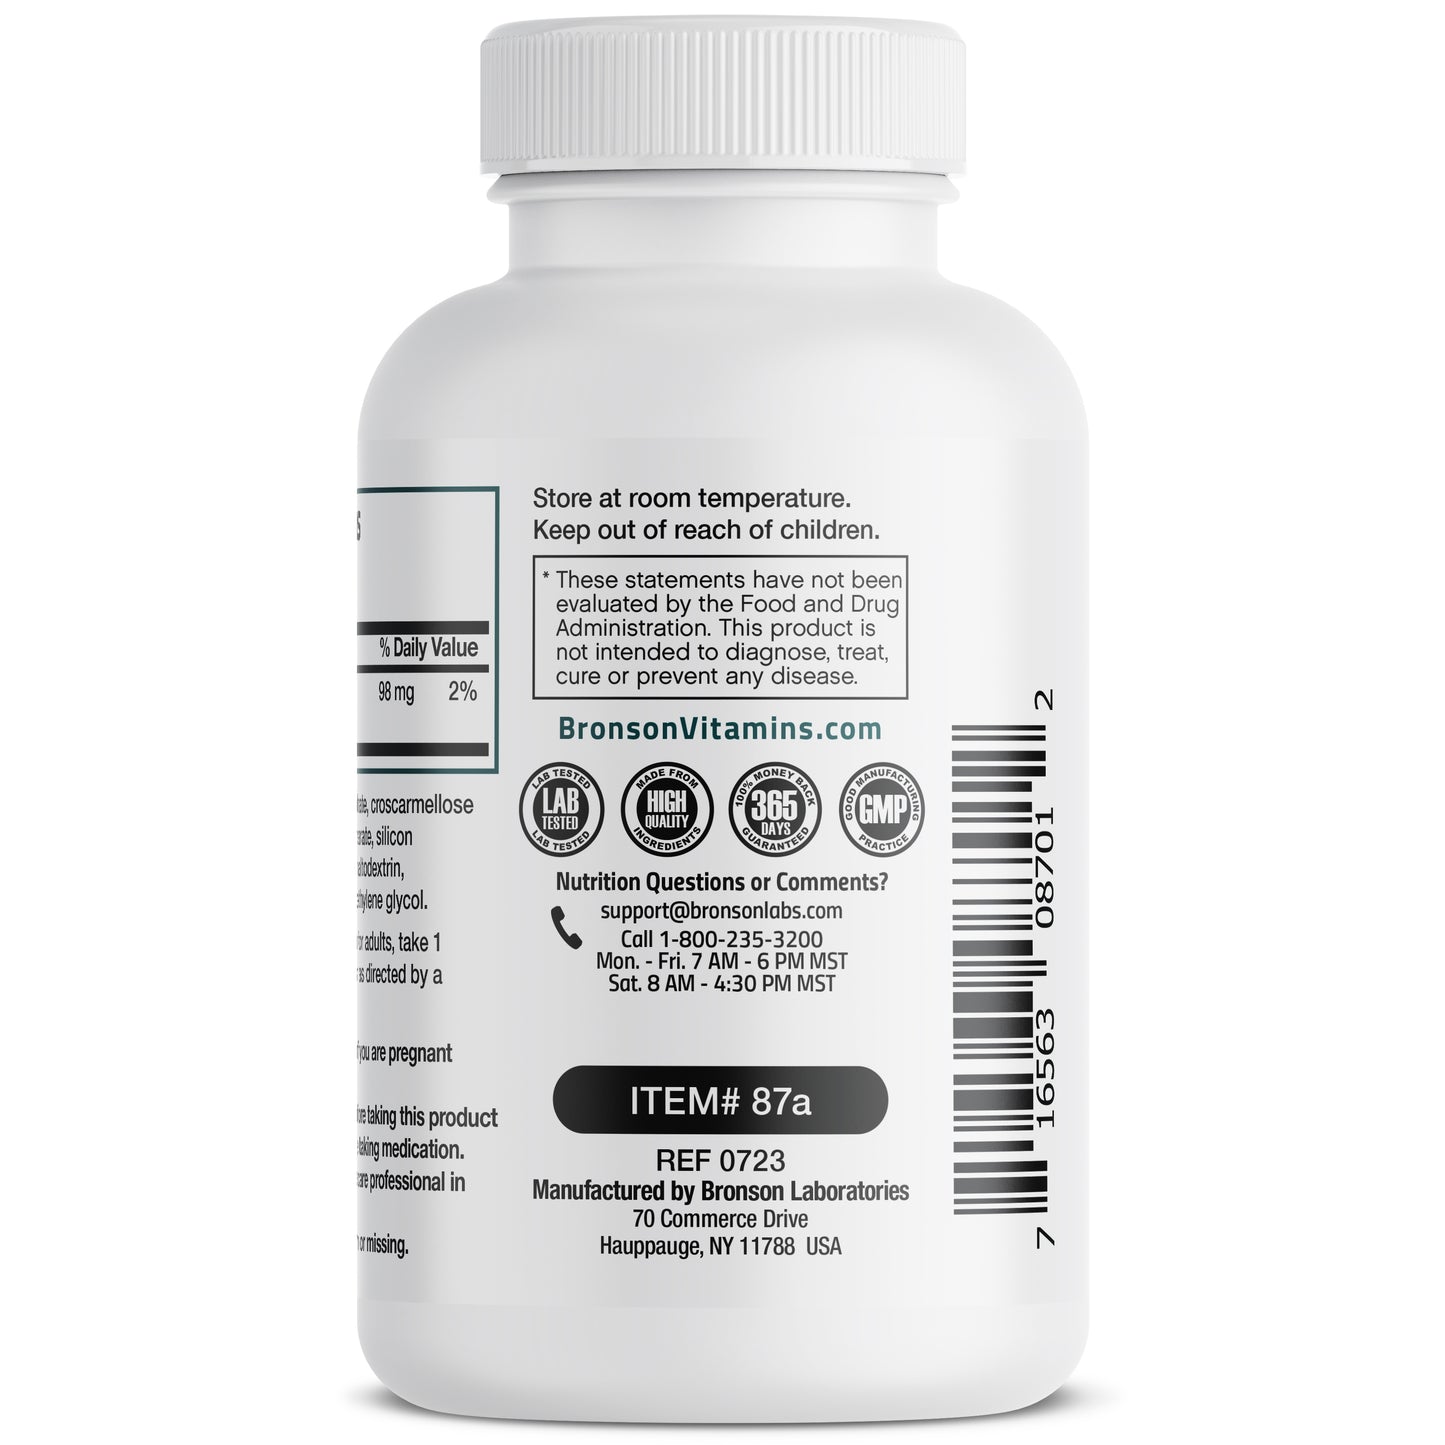 Potassium Gluconate - 98 mg - 100 Tablets